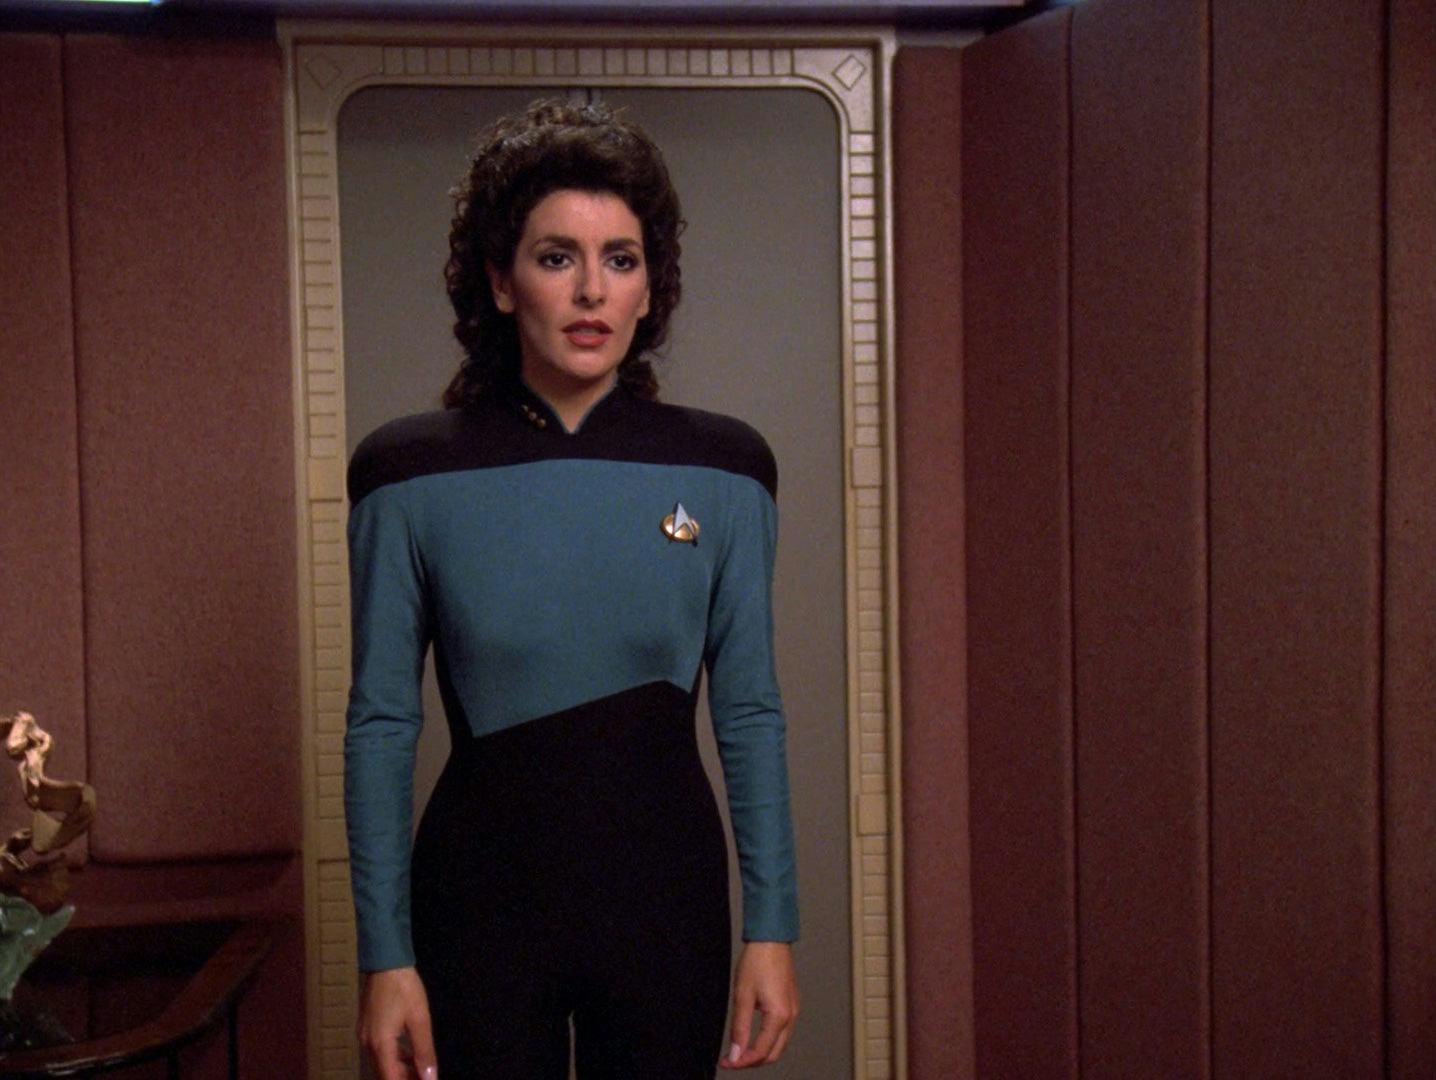 Deanna Troi, wearing her Starfleet uniform, addresses Jellico in his ready room